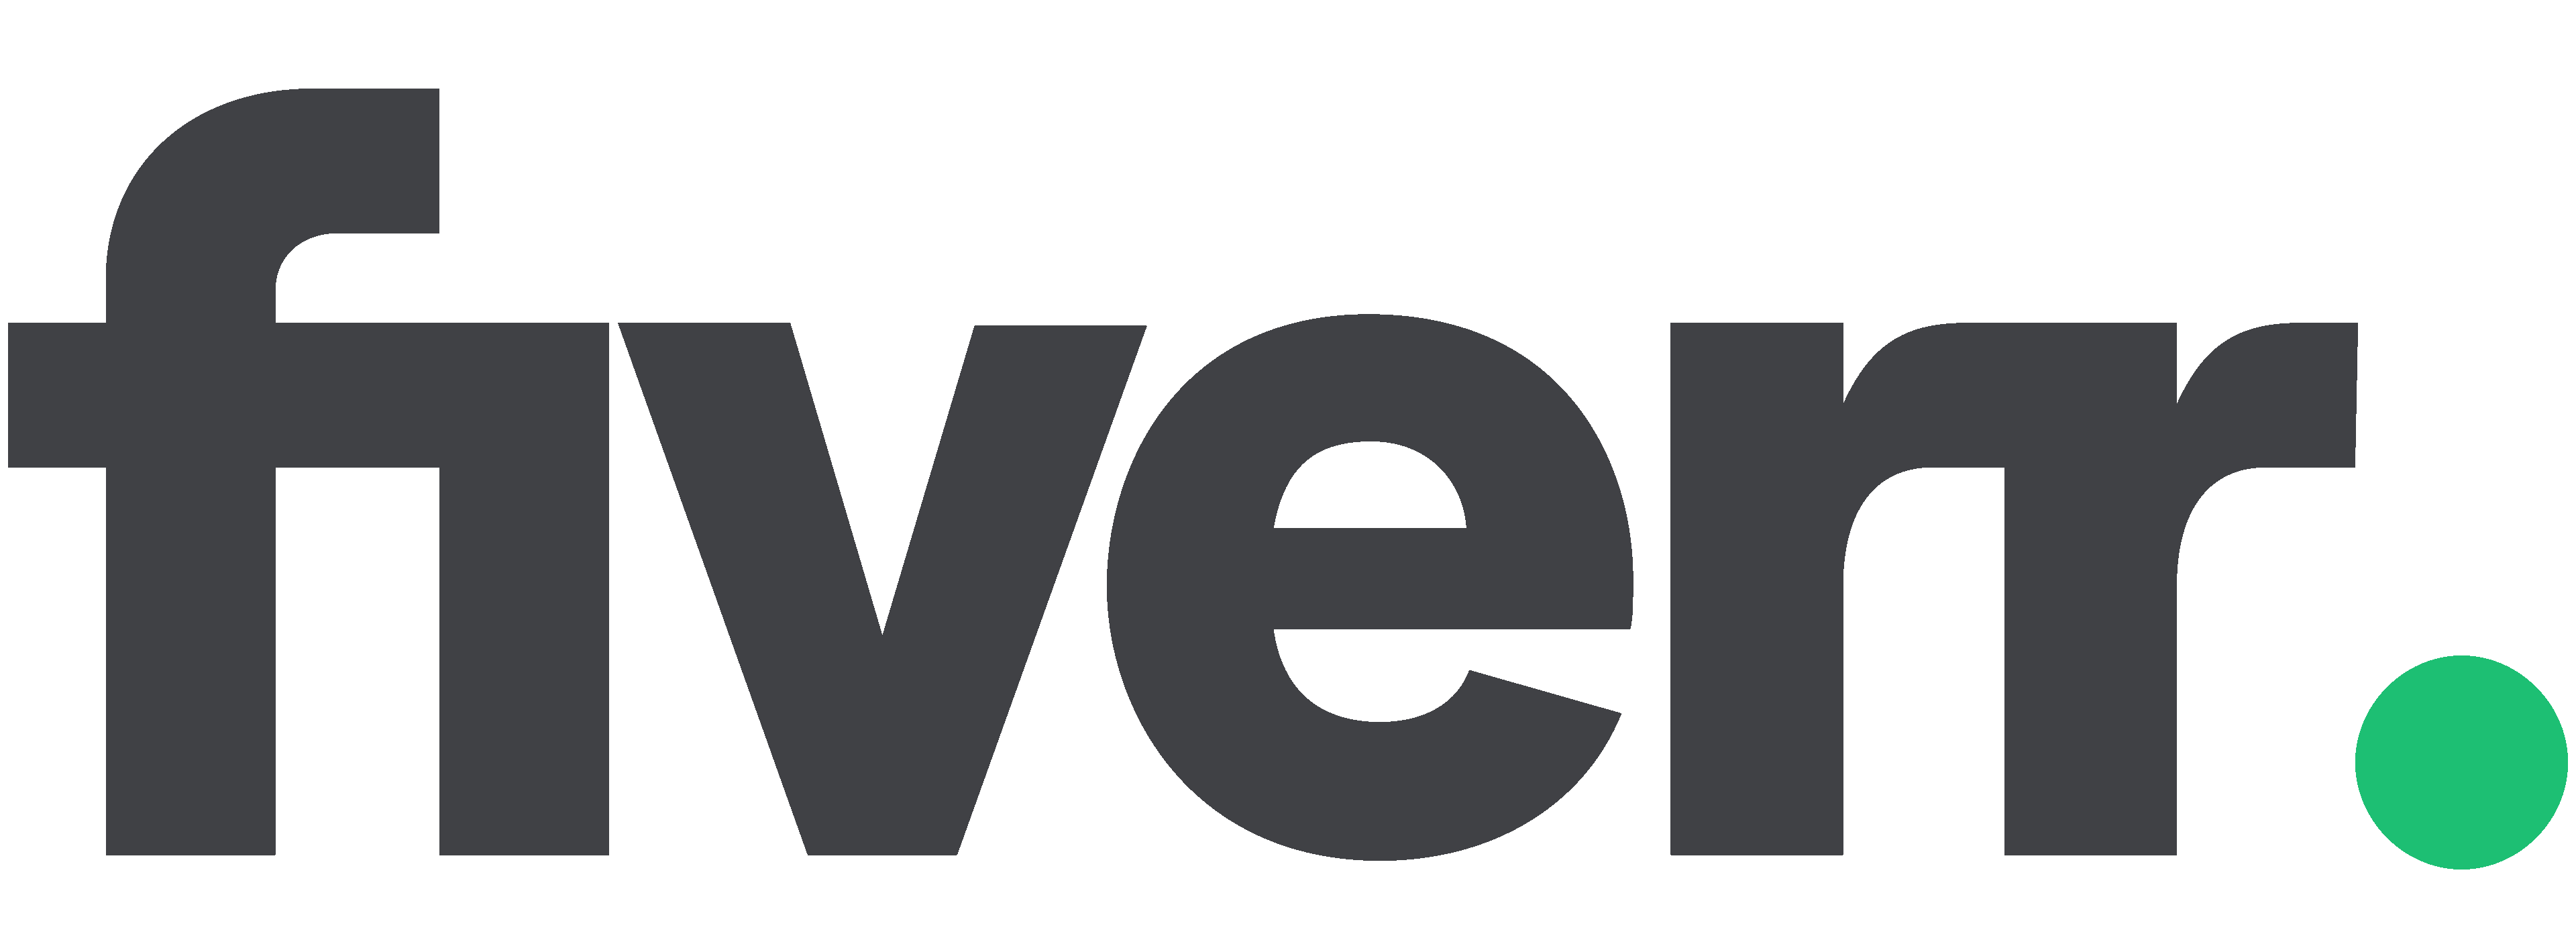 Fiverr Logo Main